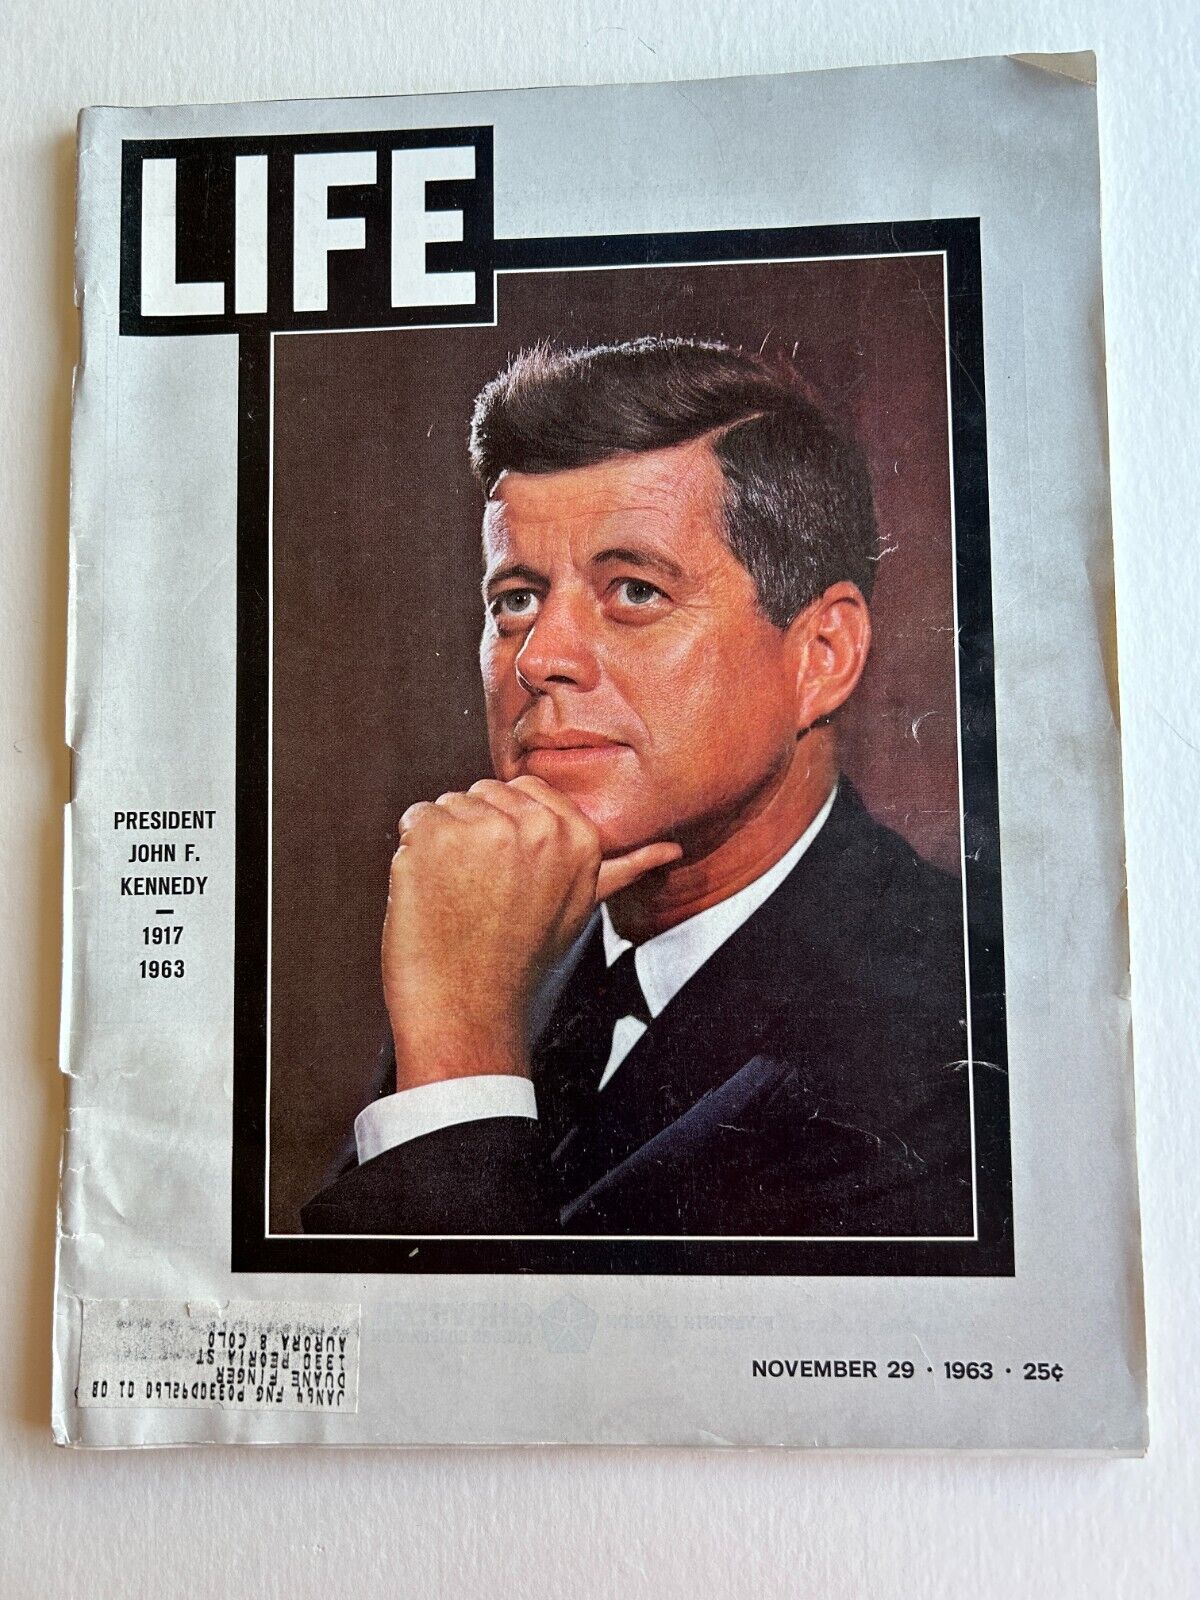 VTG Nov 1963 Life Magazine-President John F. Kennedy 1917-1963 Lot of 1 complete